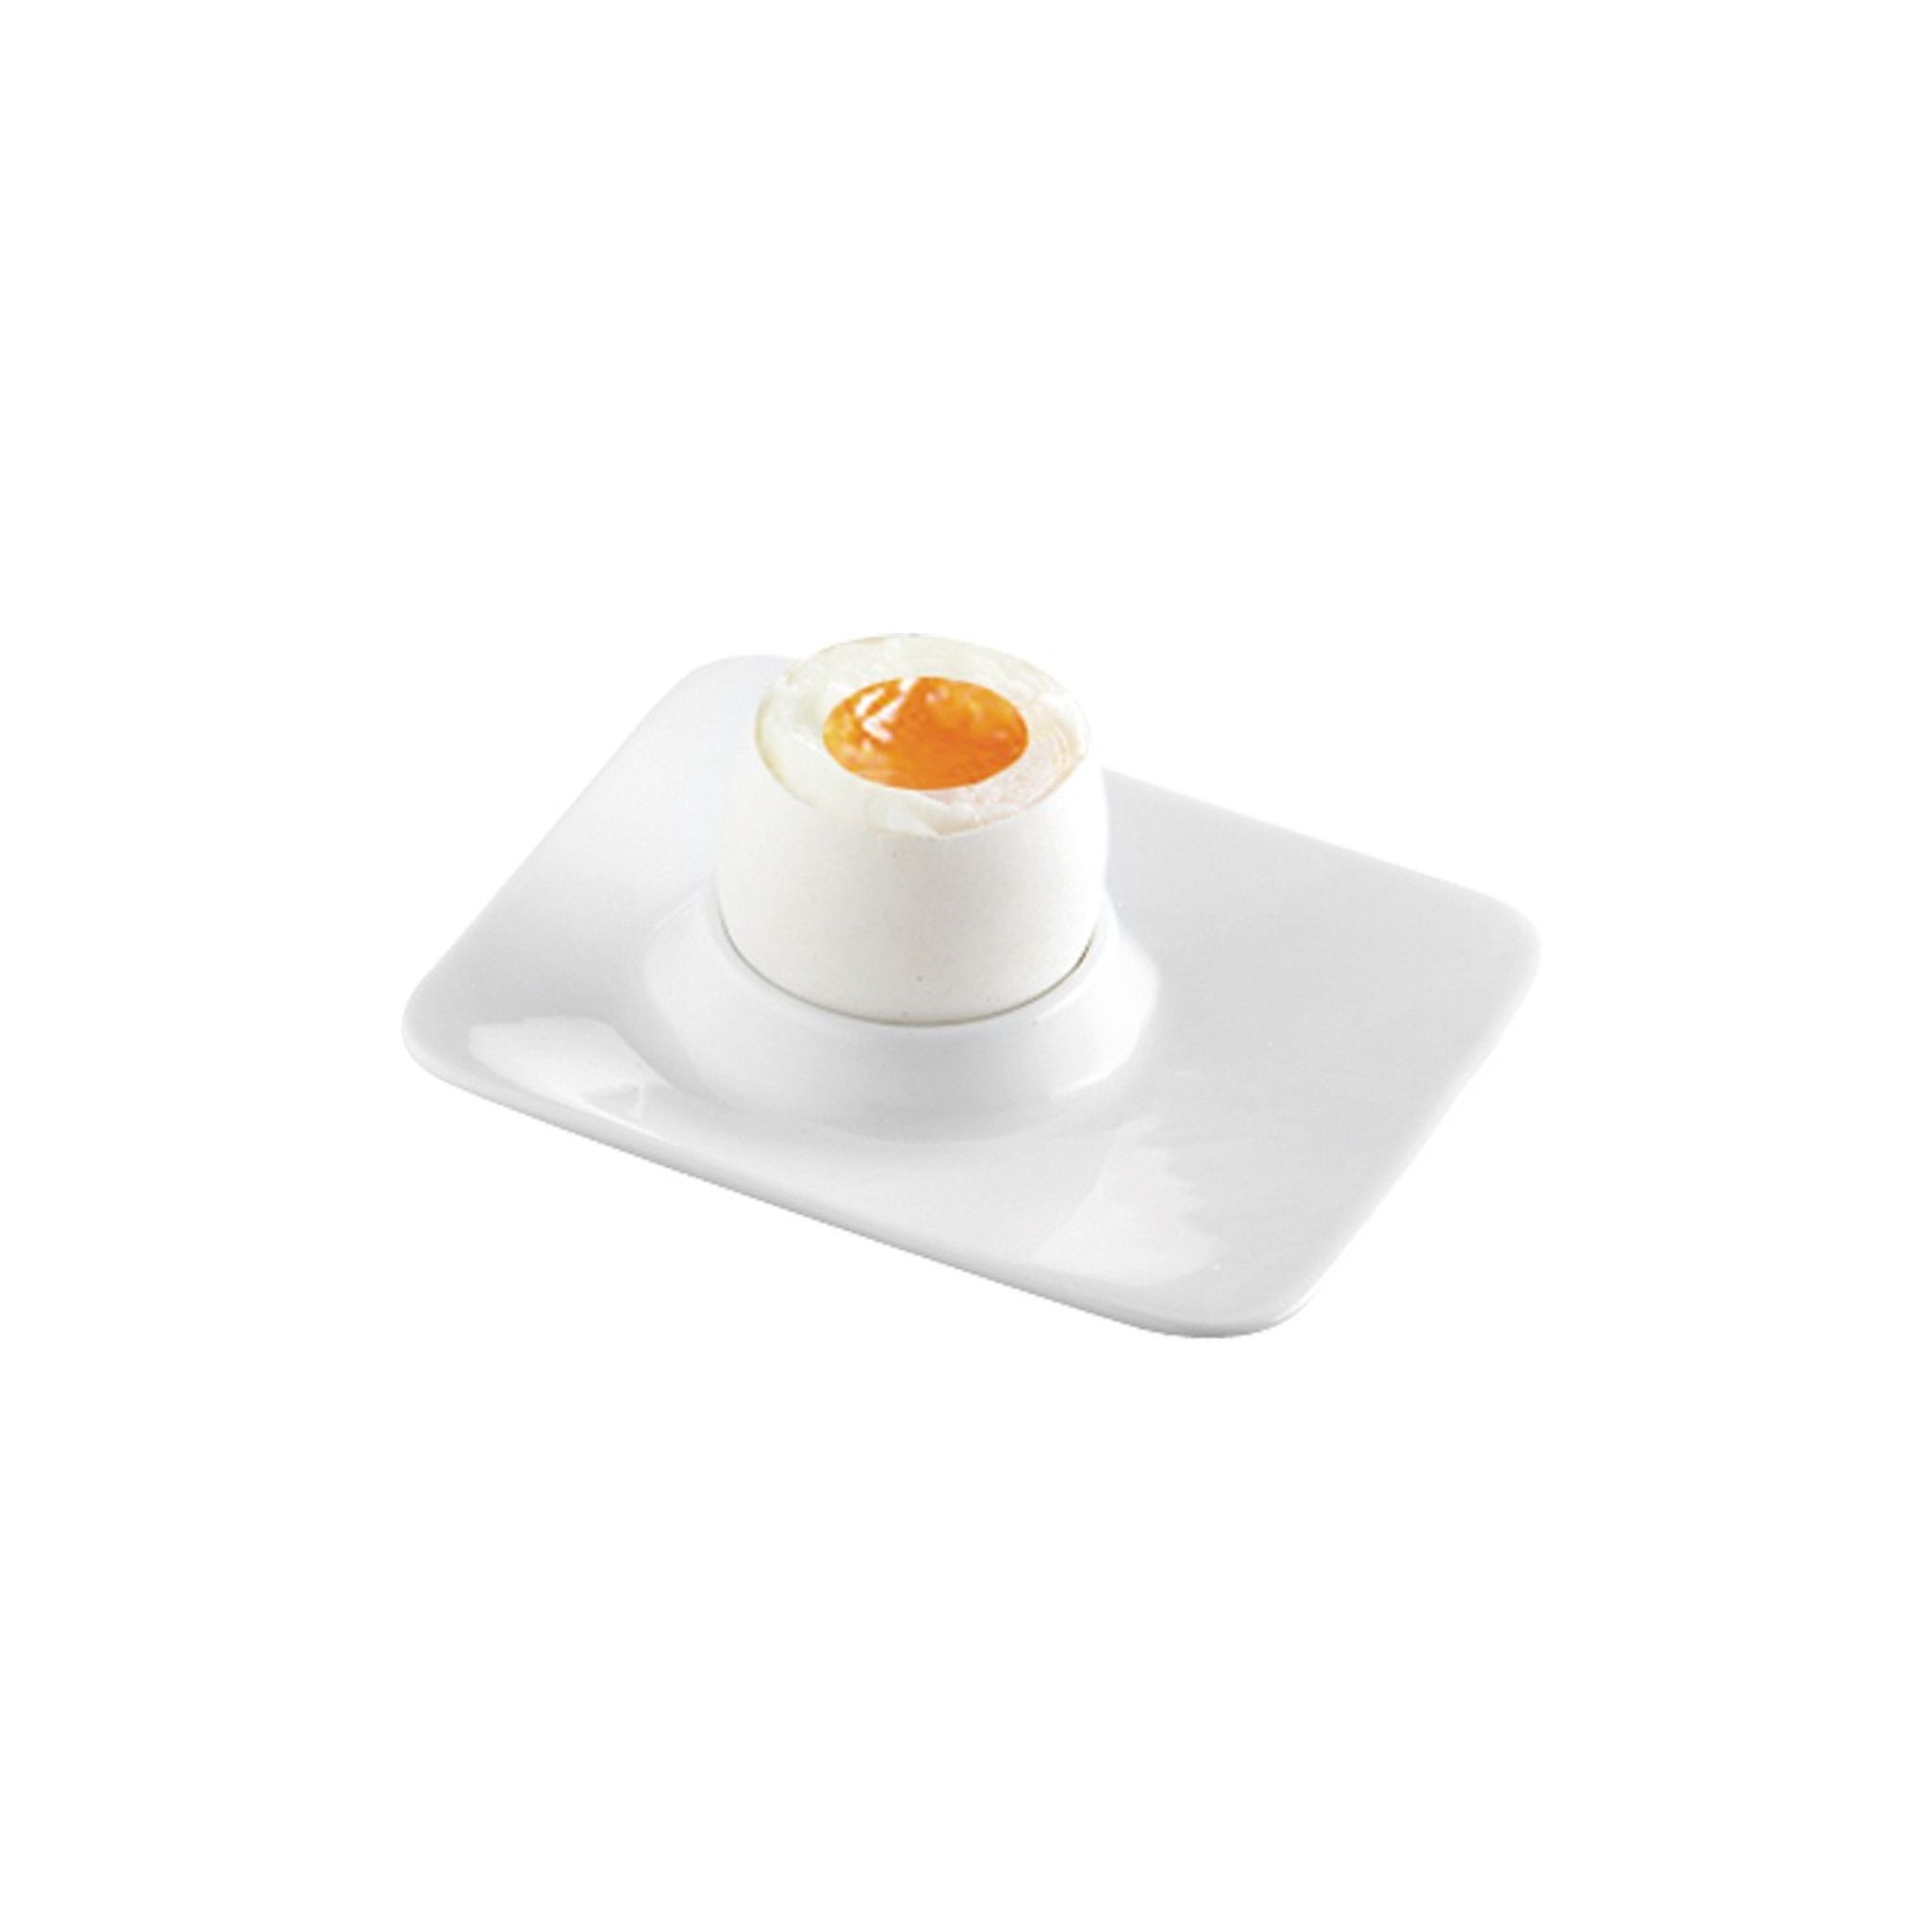 Egg holder GUSTITO, 12 x 10 cm